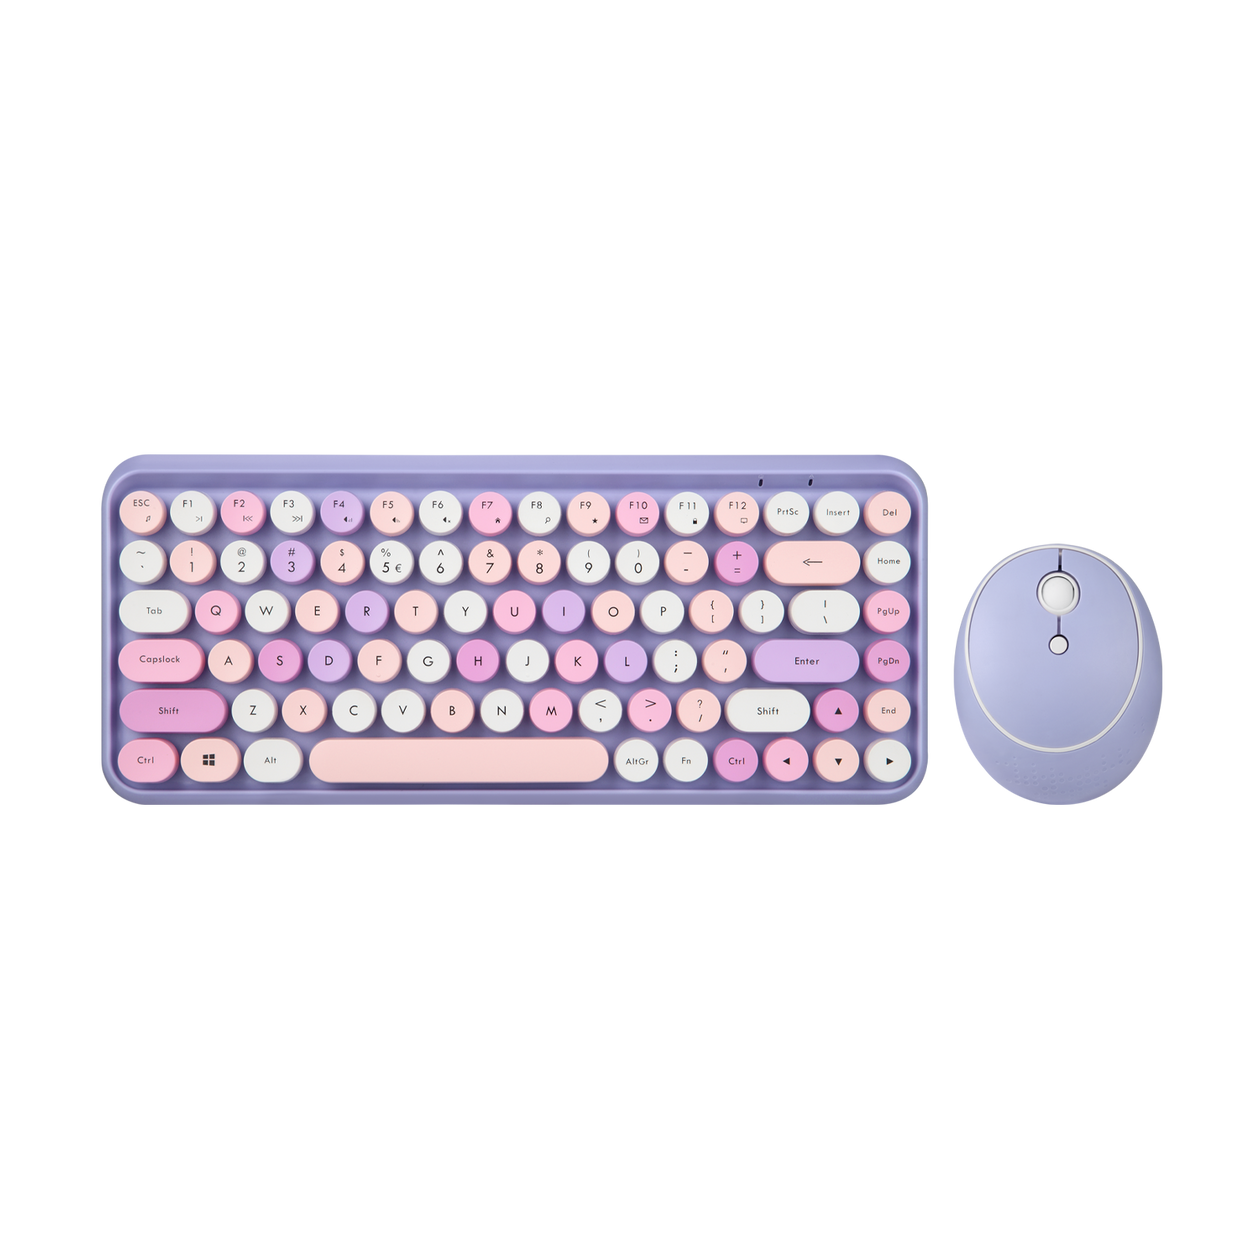 Kawaii Pastel Color Wireless Keyboard - Kawaii Fashion Shop